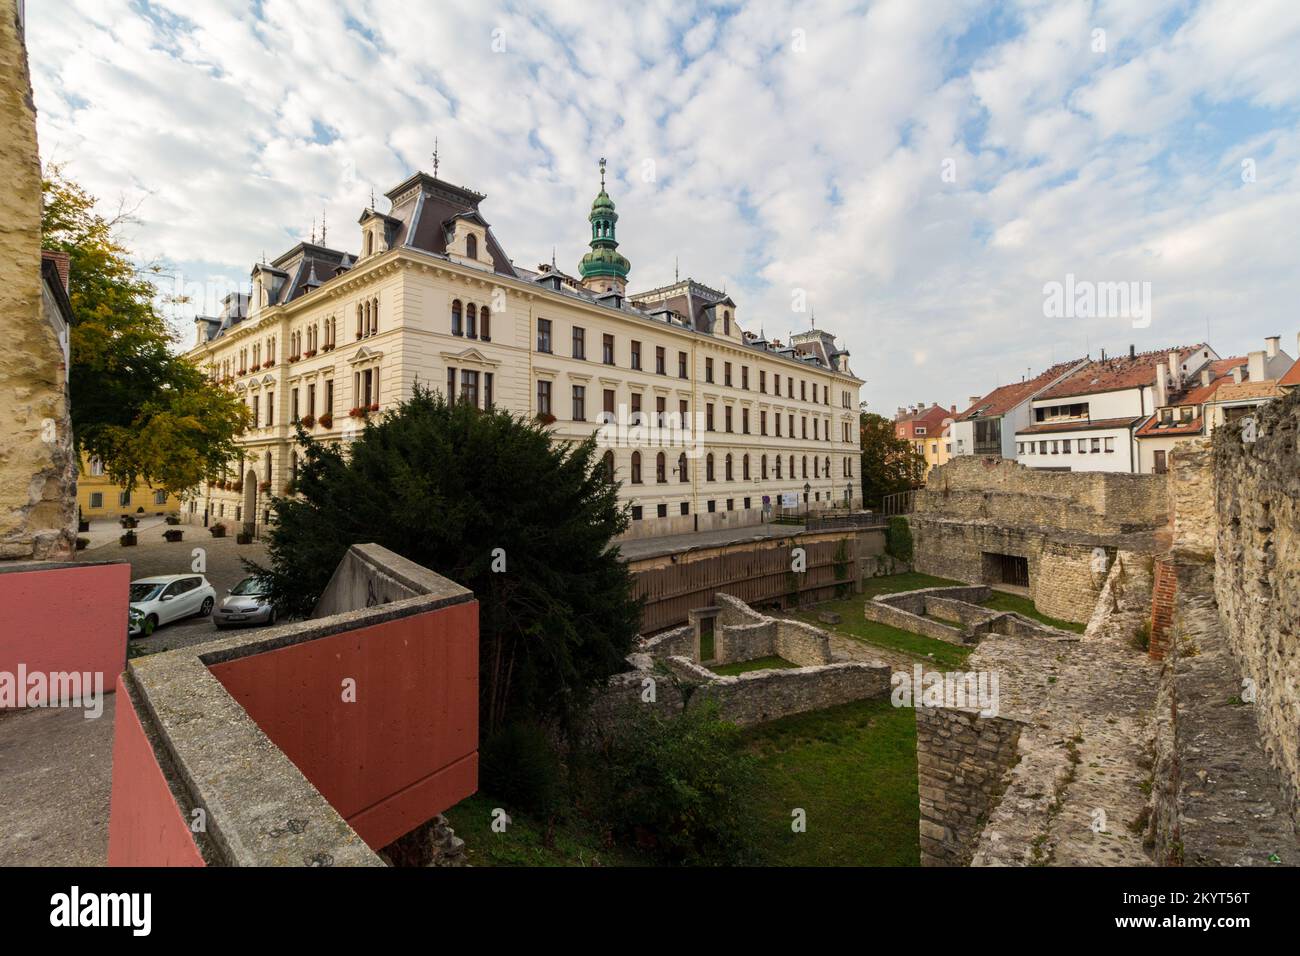 Varoshaza (Town Hall) and ancient Roman remains at archeological excavation, Sopron, Hungary Stock Photo